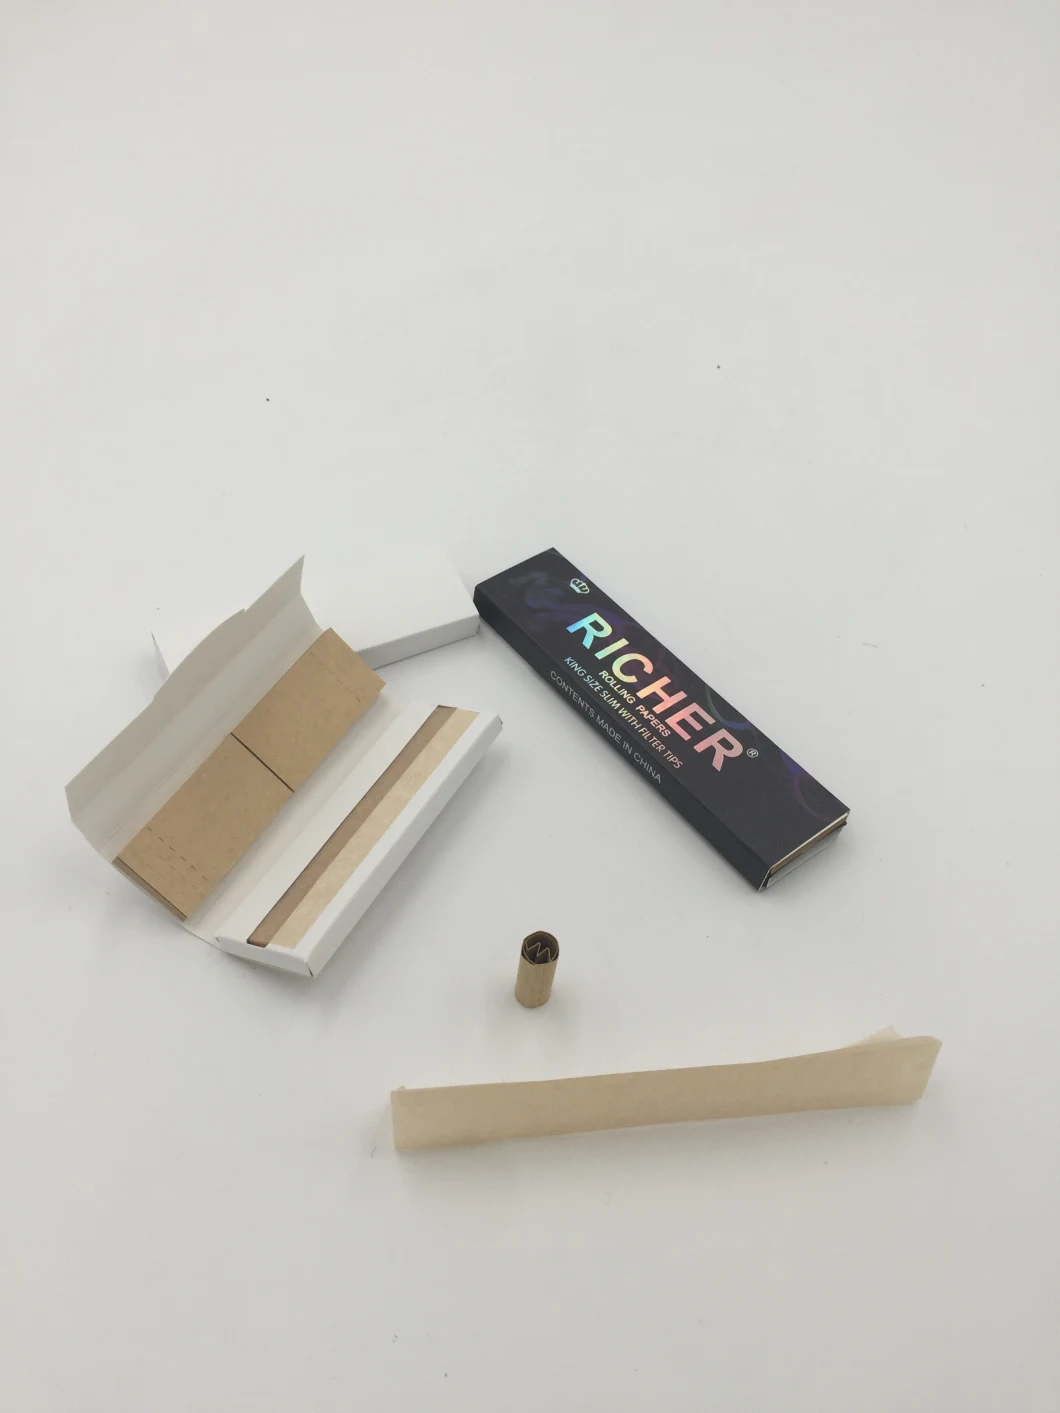 Custom Your Brand Premium Hemp King Slim Cigarette Rolling Paper with Filter Tips